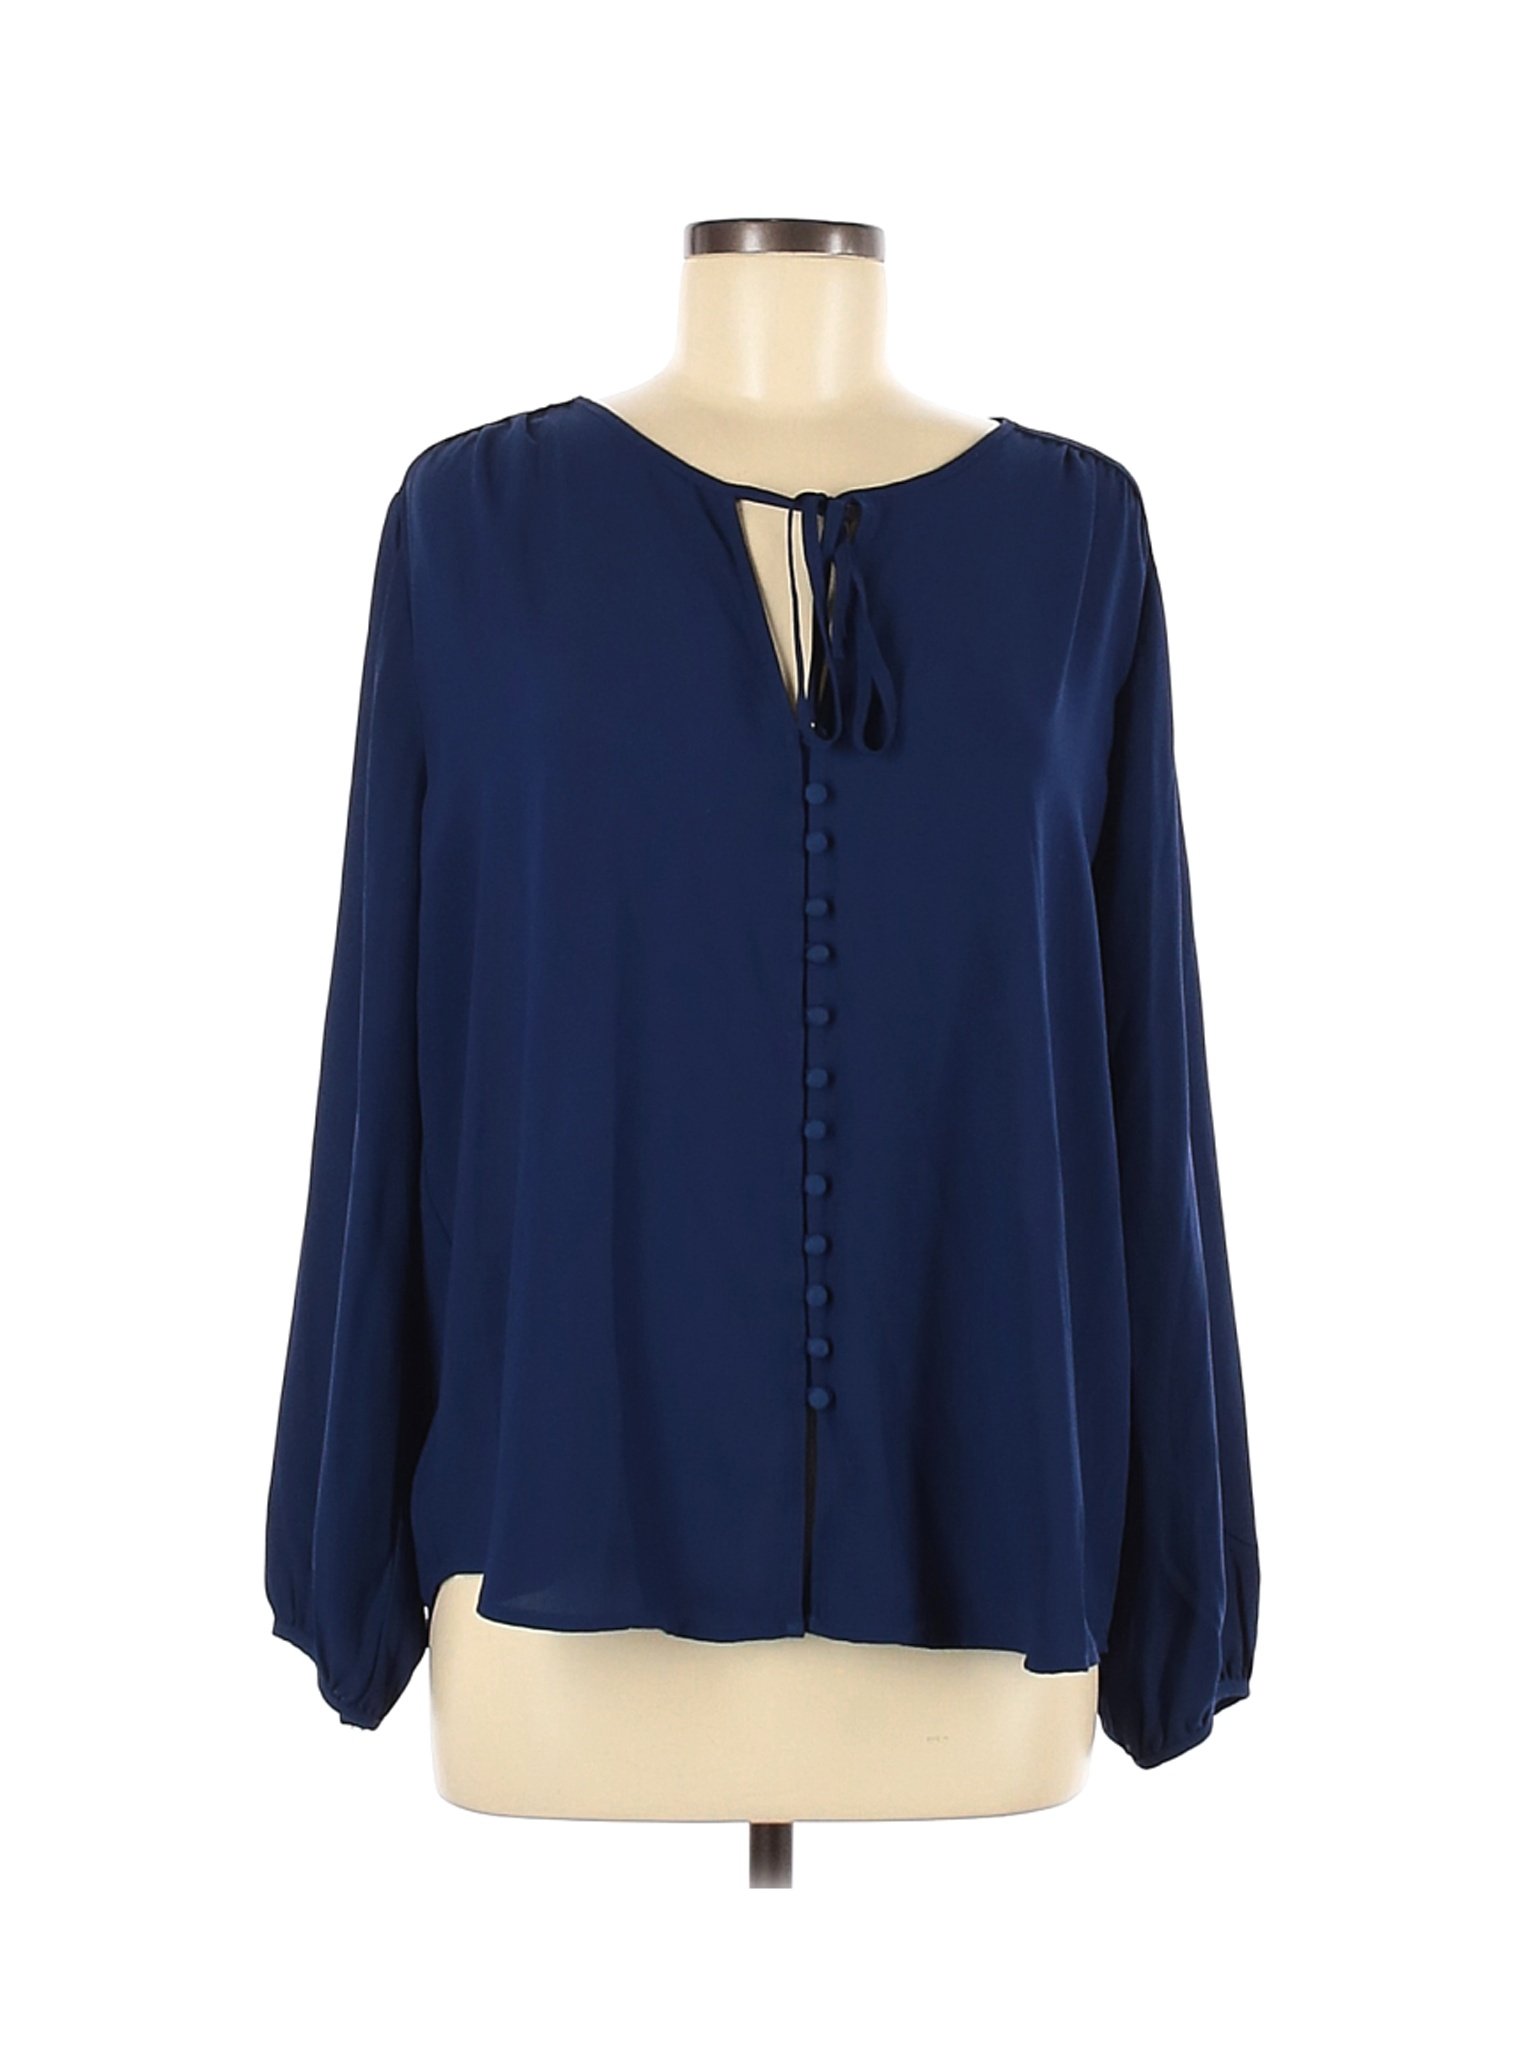 Lark & Ro Women Blue Long Sleeve Blouse L | eBay